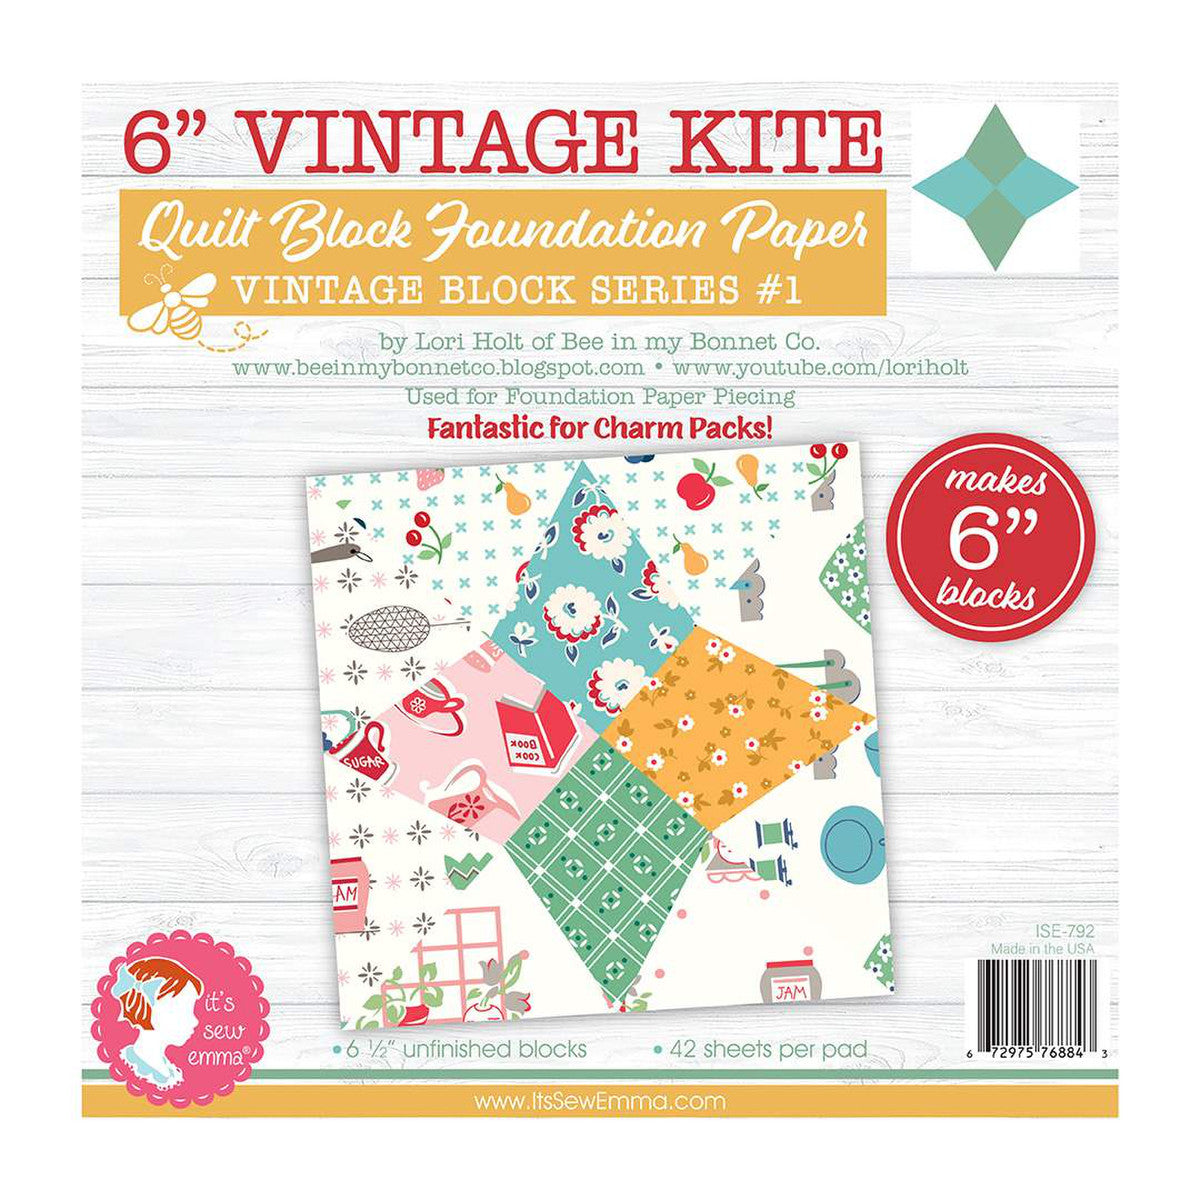 Foundation Paper Pad, 6-inch Vintage Kite Quilt Block